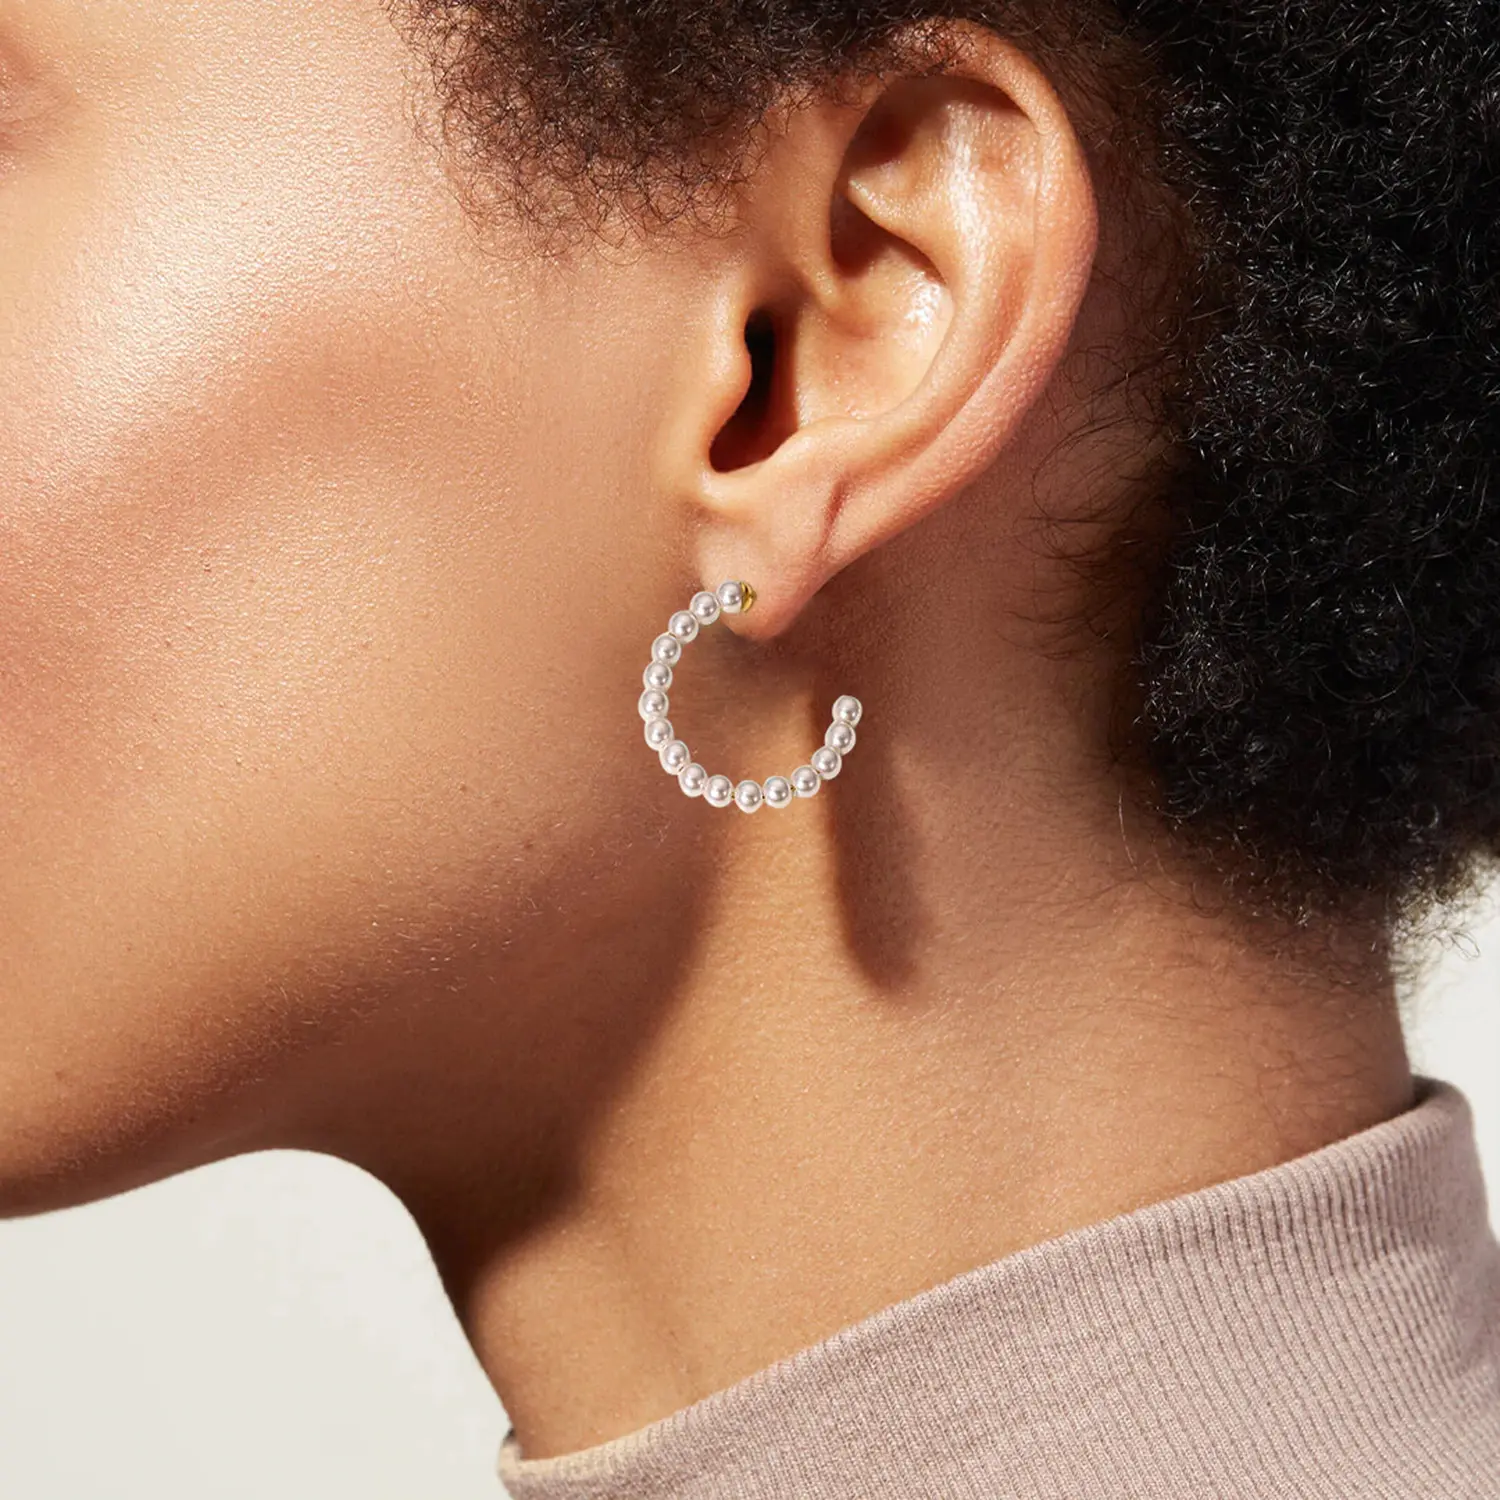 French Style Pearl C-shaped Jewelry Earrings Stainless Steel 20mm Mini Pearl Hoop Earring for Women